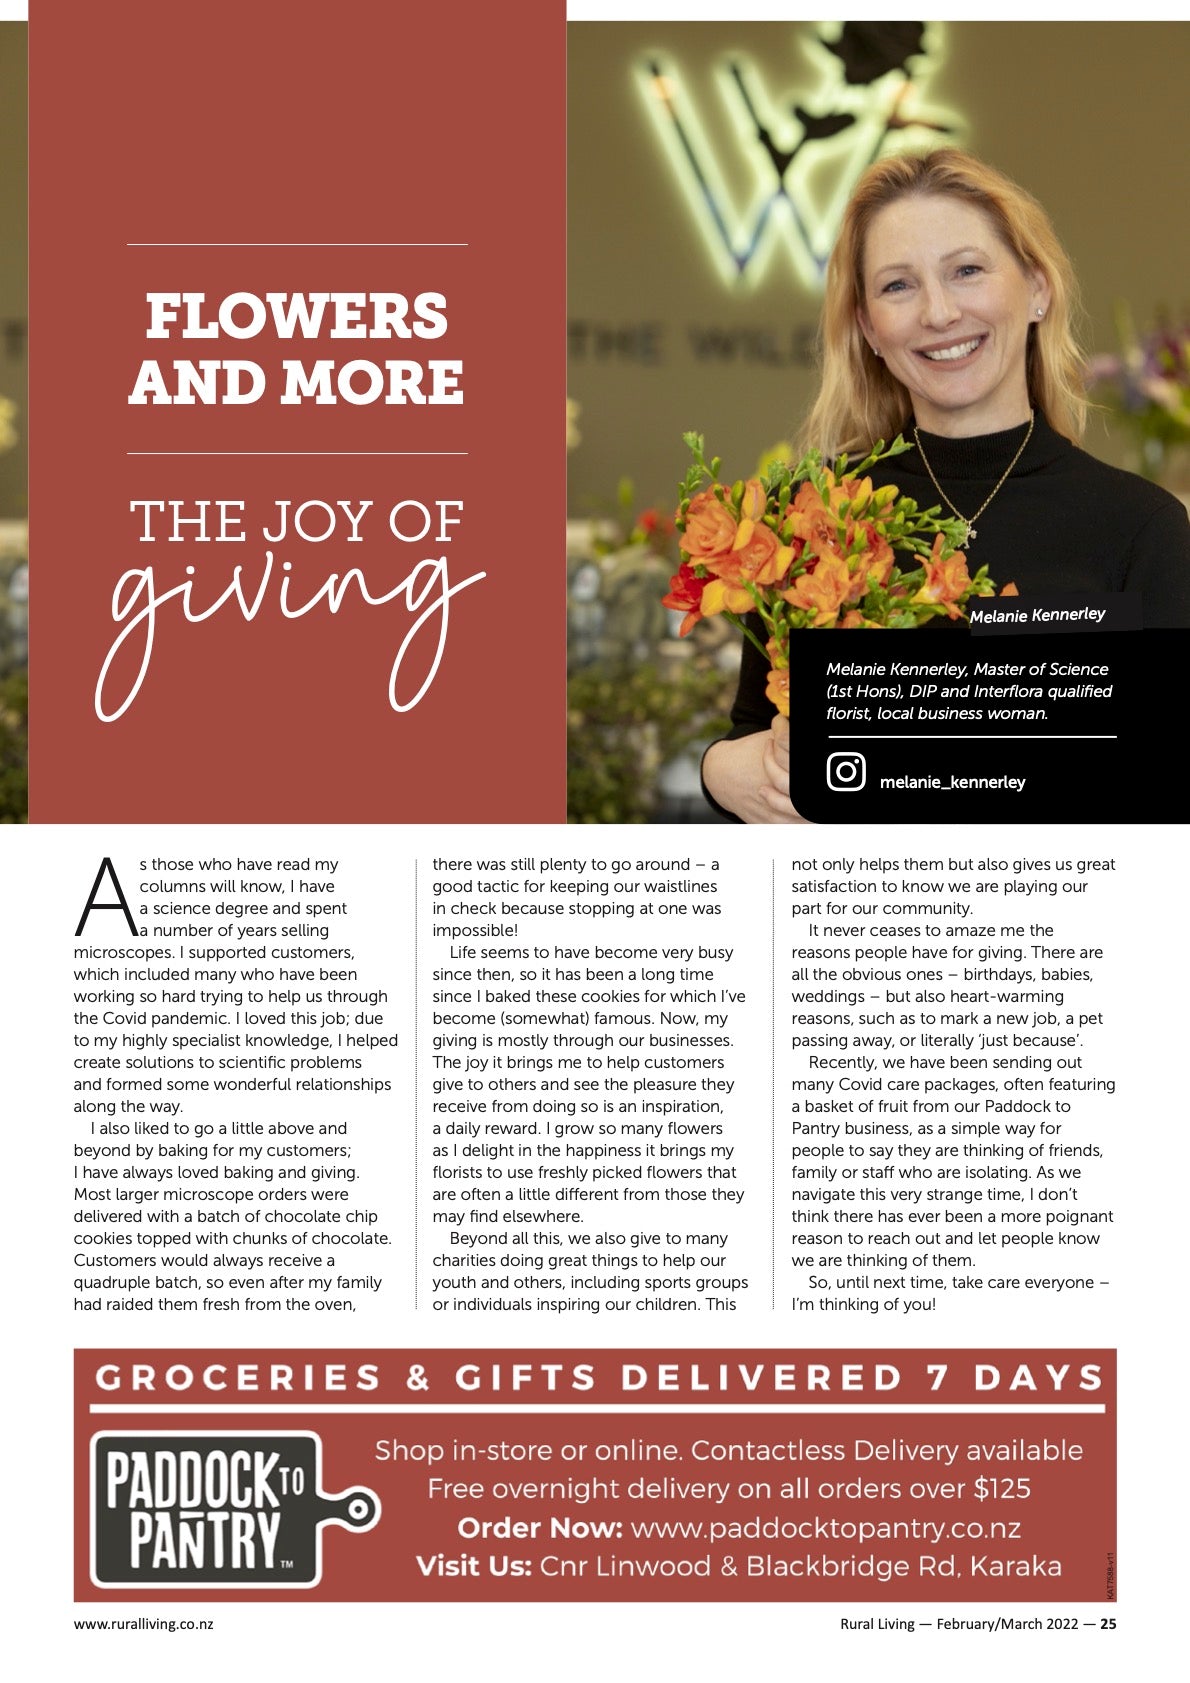 Flower Delivery Auckland. Auckland Florist. Flower Delivery NZ. Free Flower Delivery. Wedding Flowers. Sympathy Flowers.